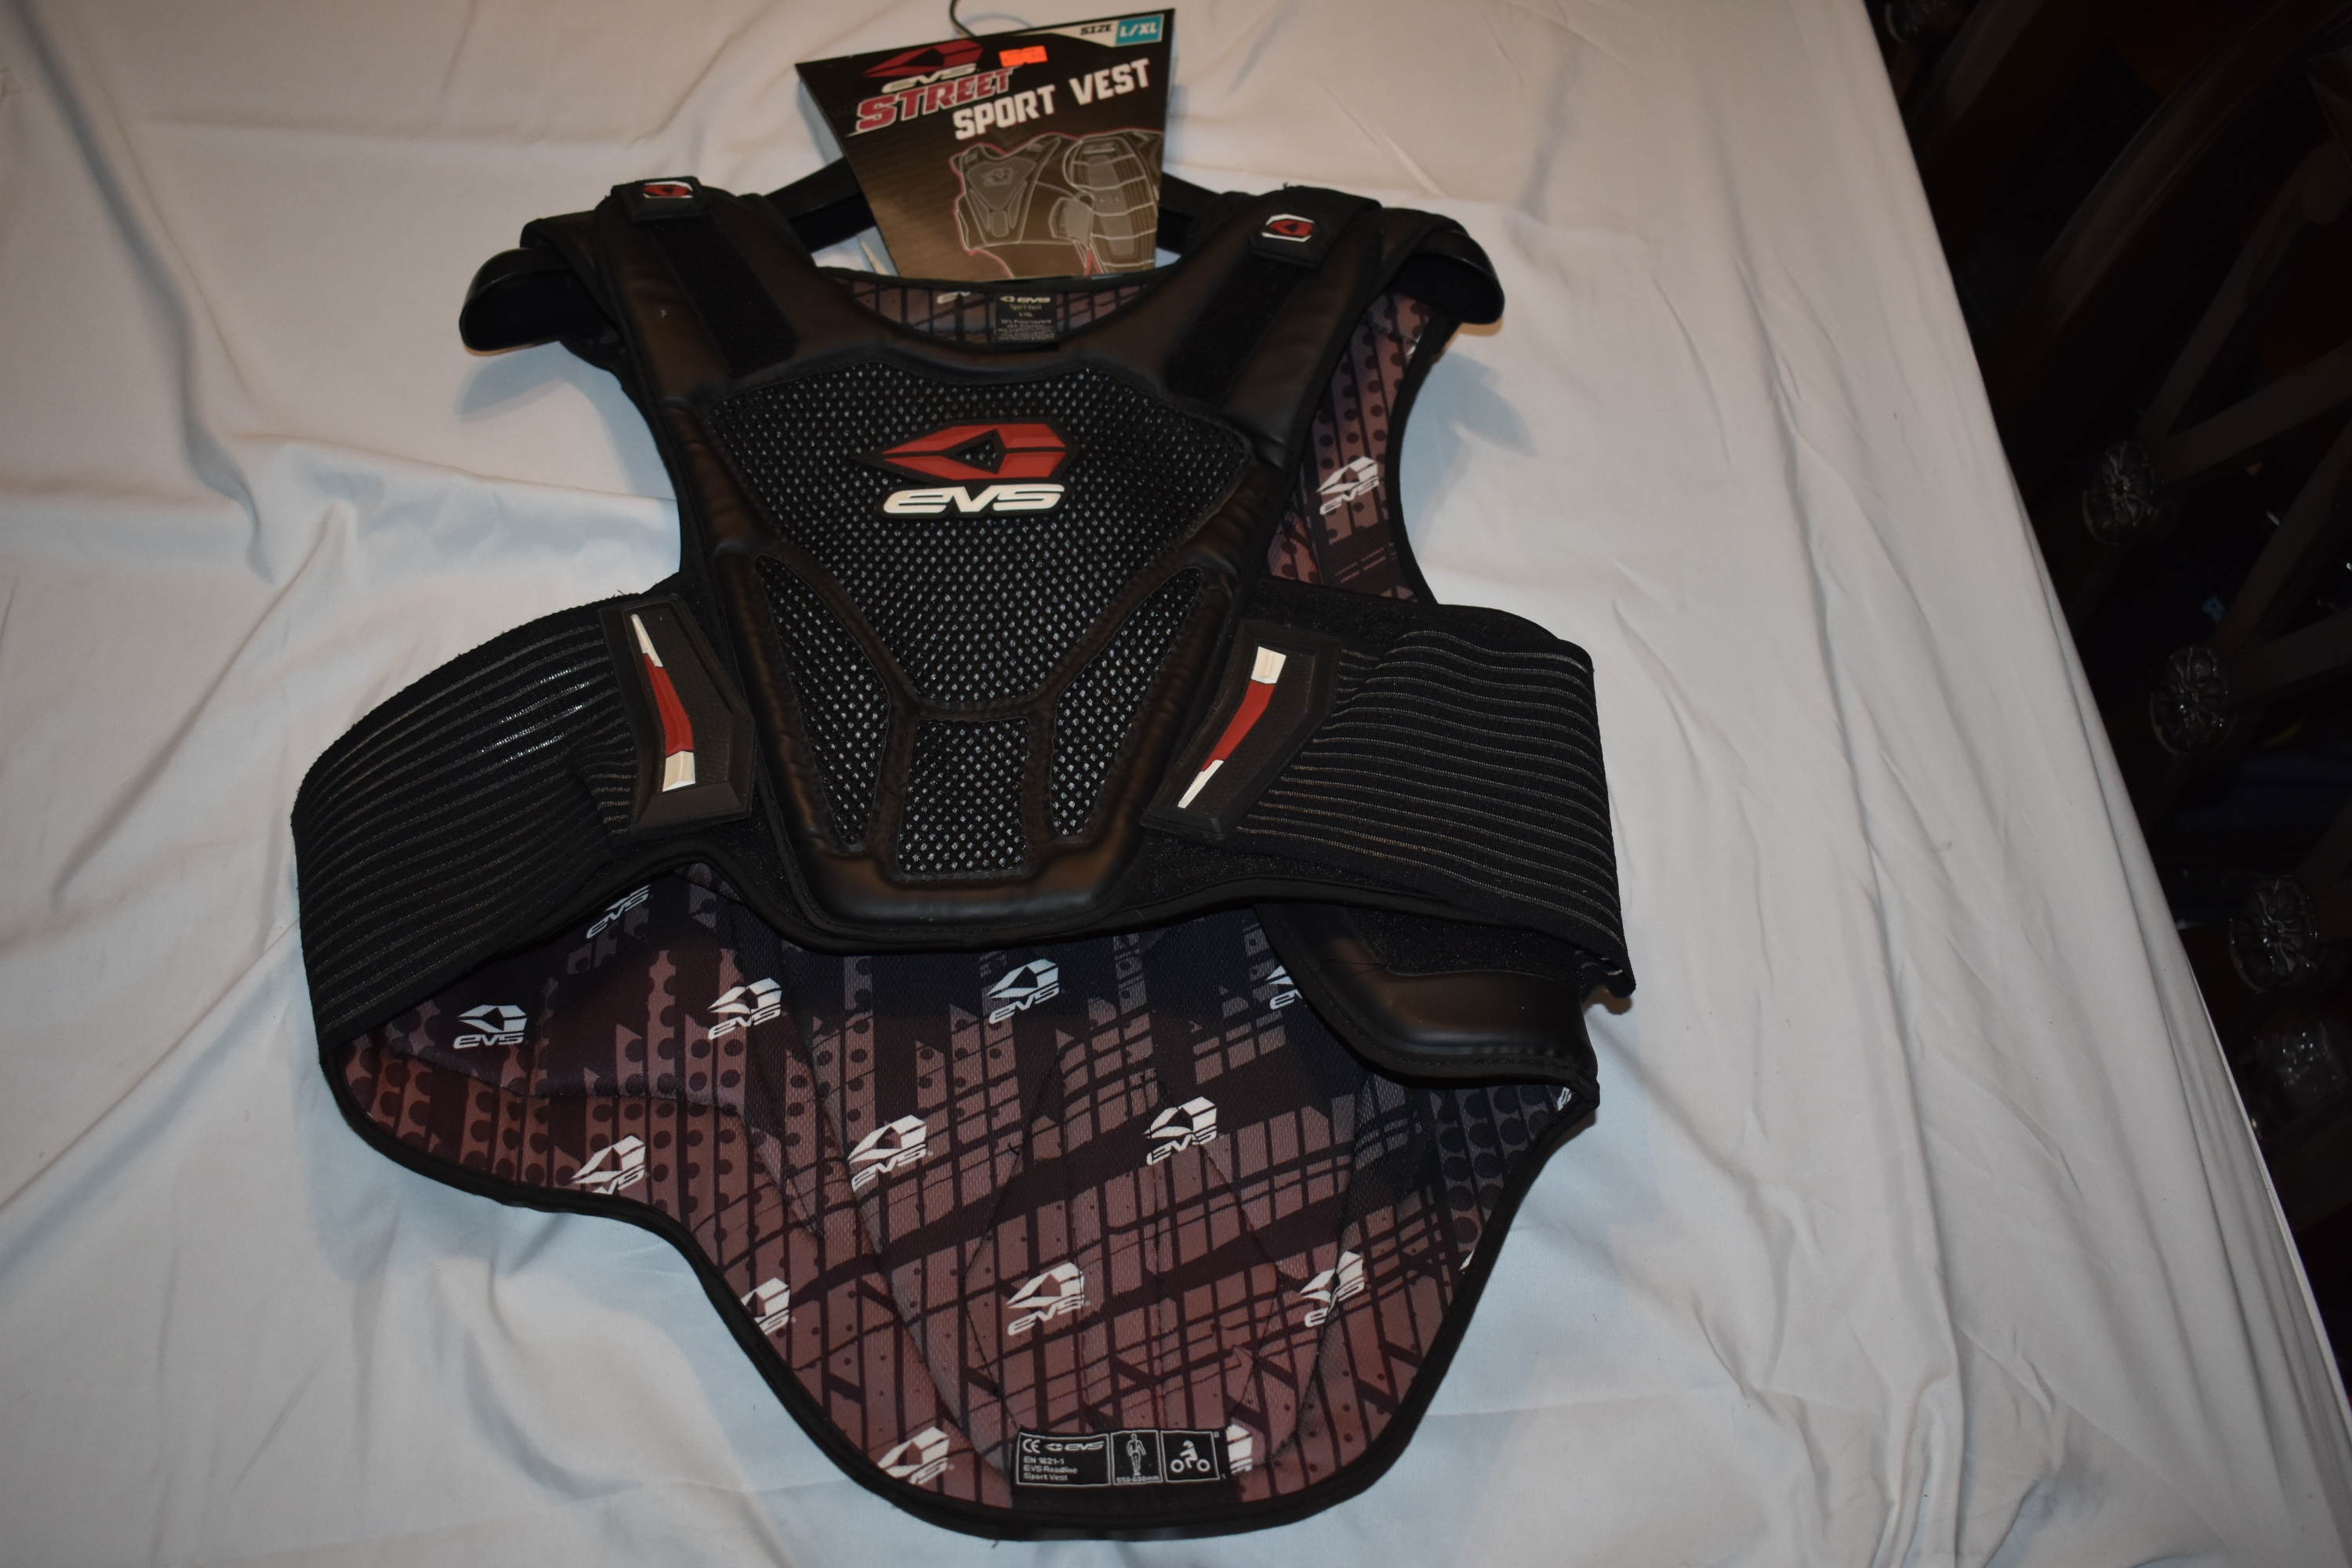 NEW - EVS Street Sport Body Armor Vest, Black, Adult L/XL - Great protection !